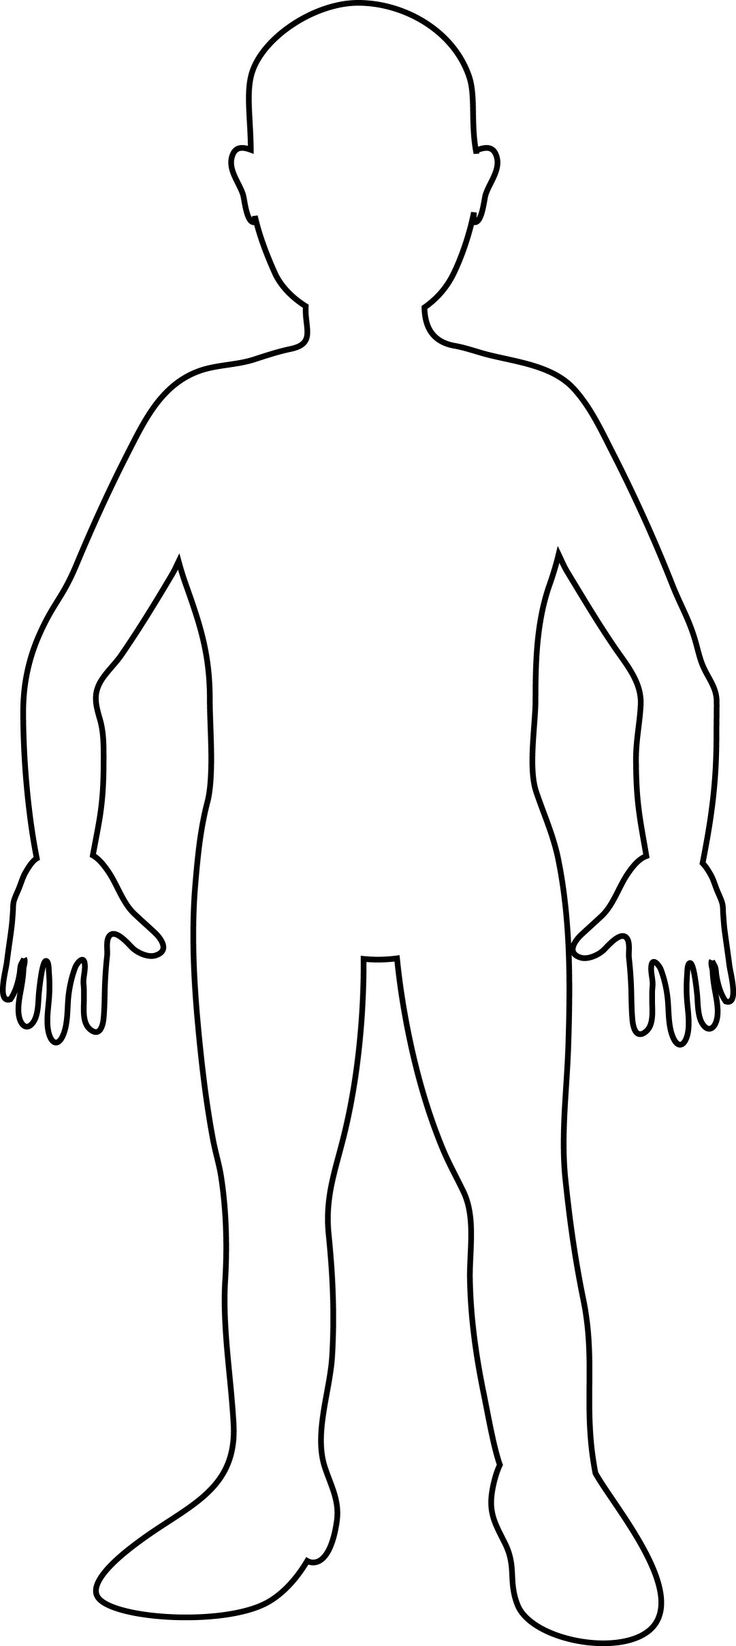 Outline Of The Human Body Printable